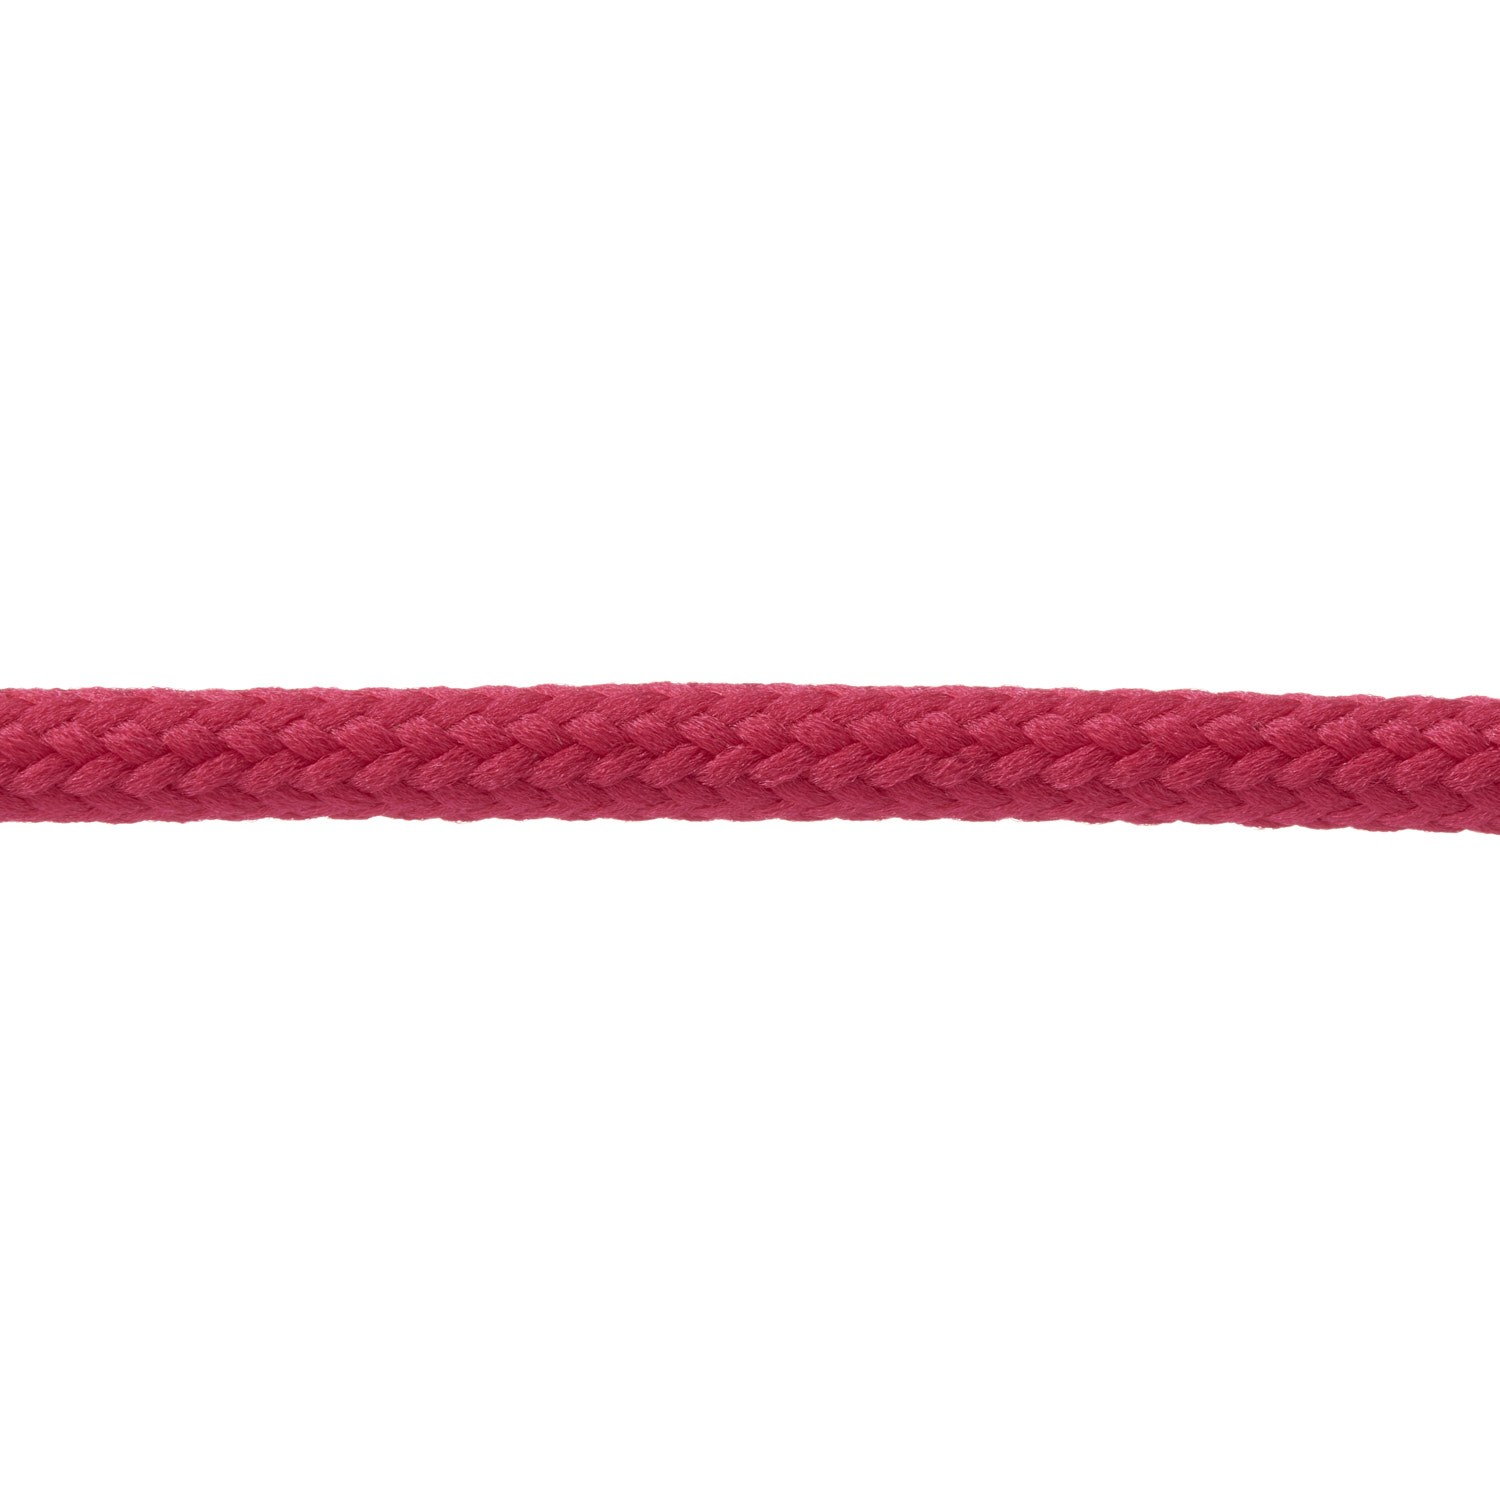 Kalsi Cords Cerise Pink Round Cord Shoe Laces 3